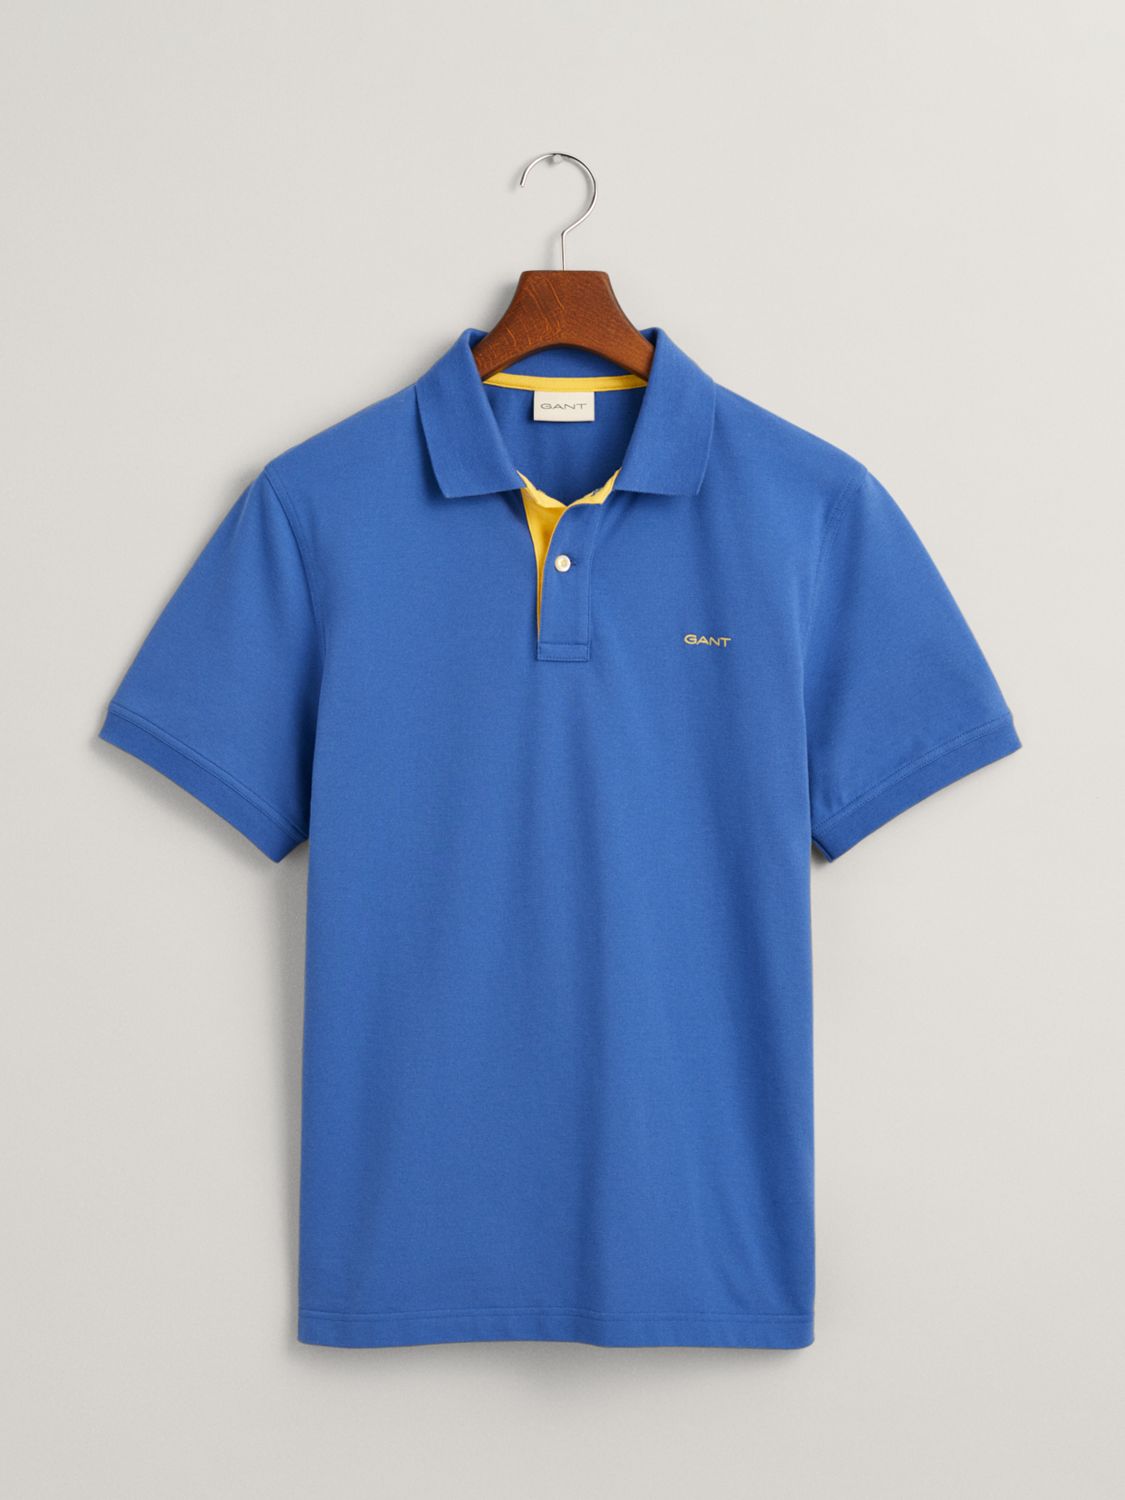 GANT Embroidered Logo Polo Top, Blue, XL